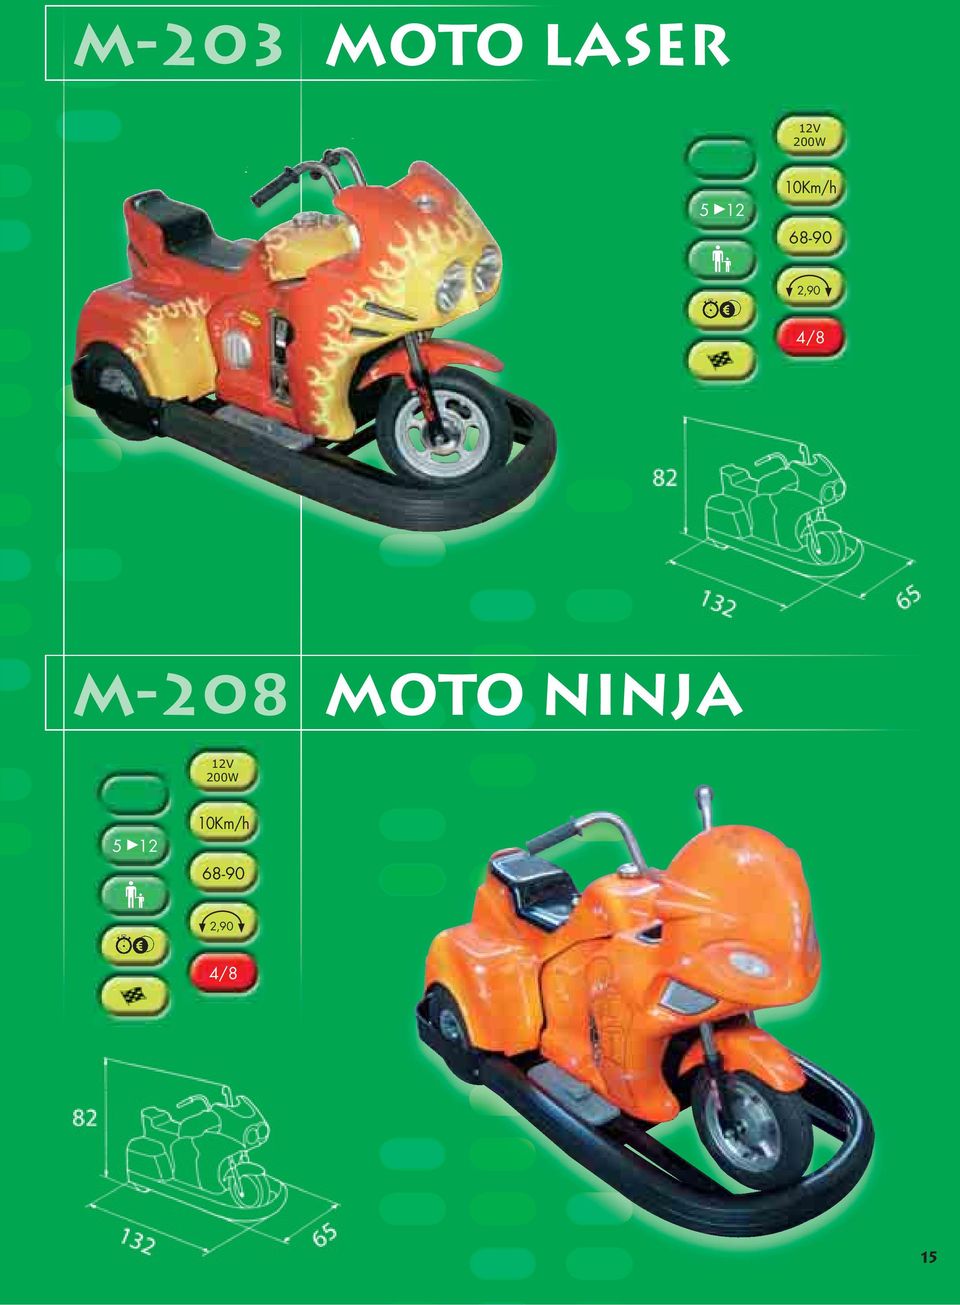 M-208 MOTO NINJA